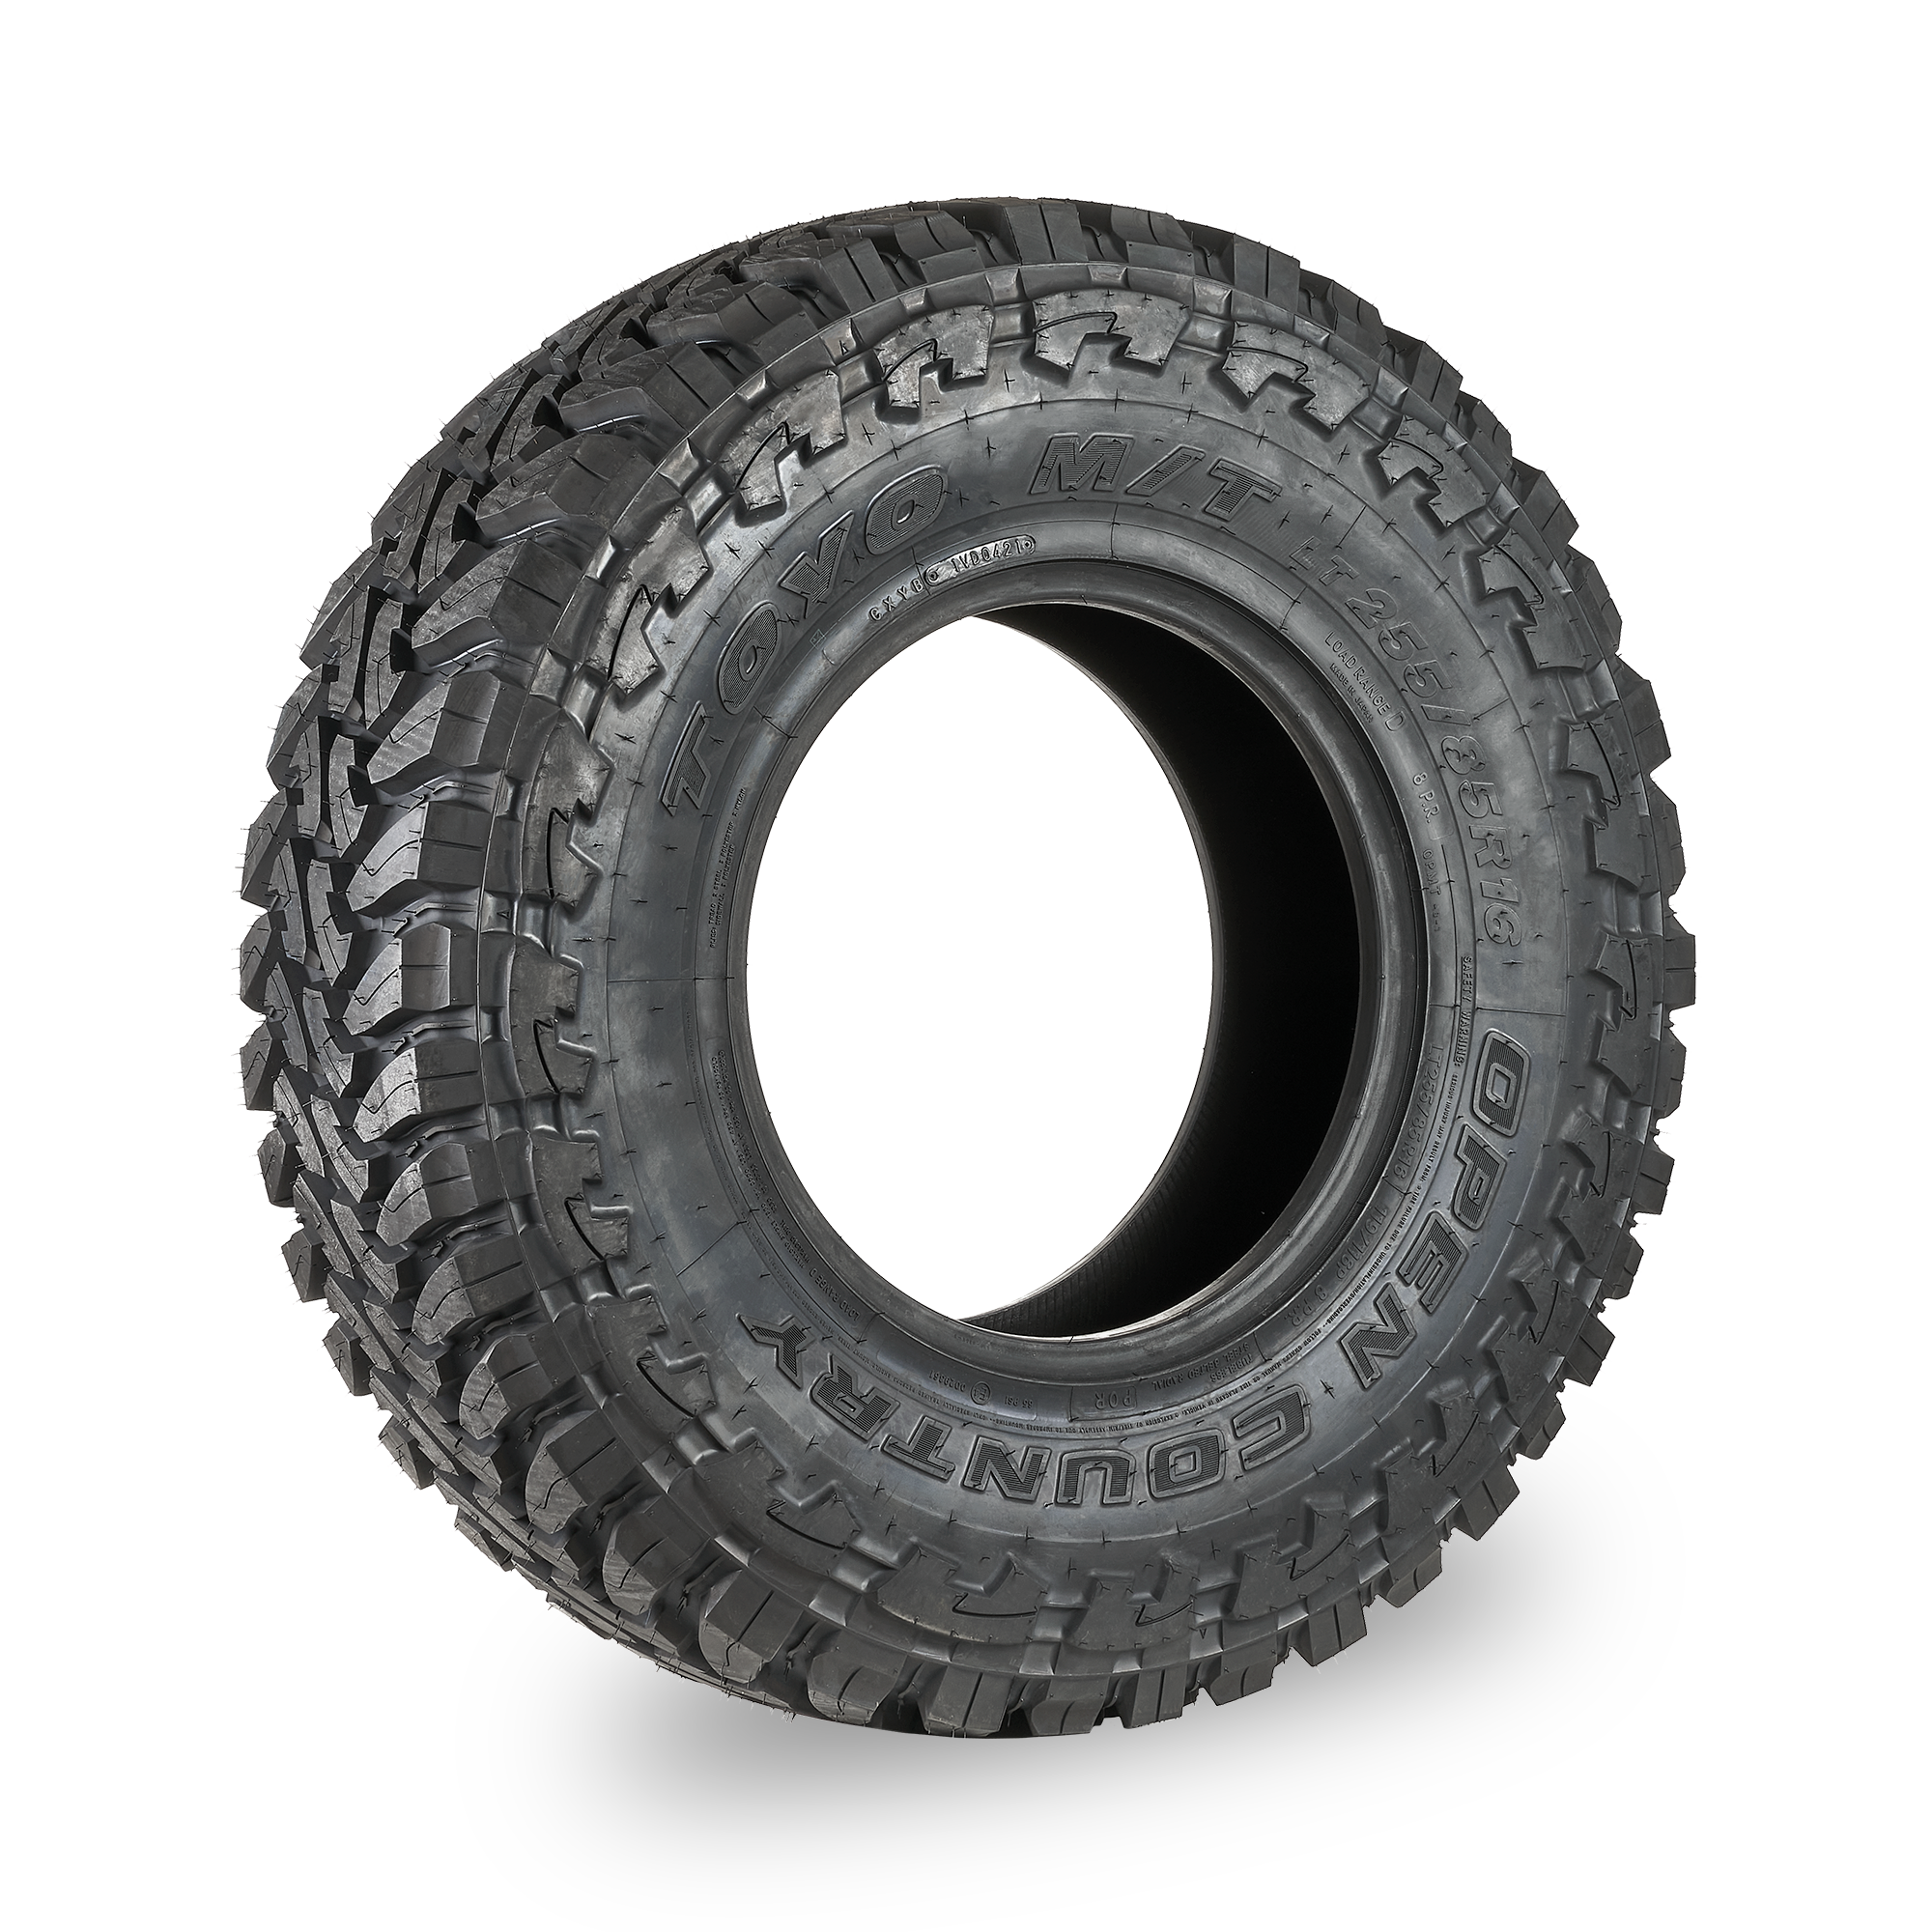 305/70R16 Toyo Open Country MT Mud Terrain 118P Tyre - 4x4 Tyres